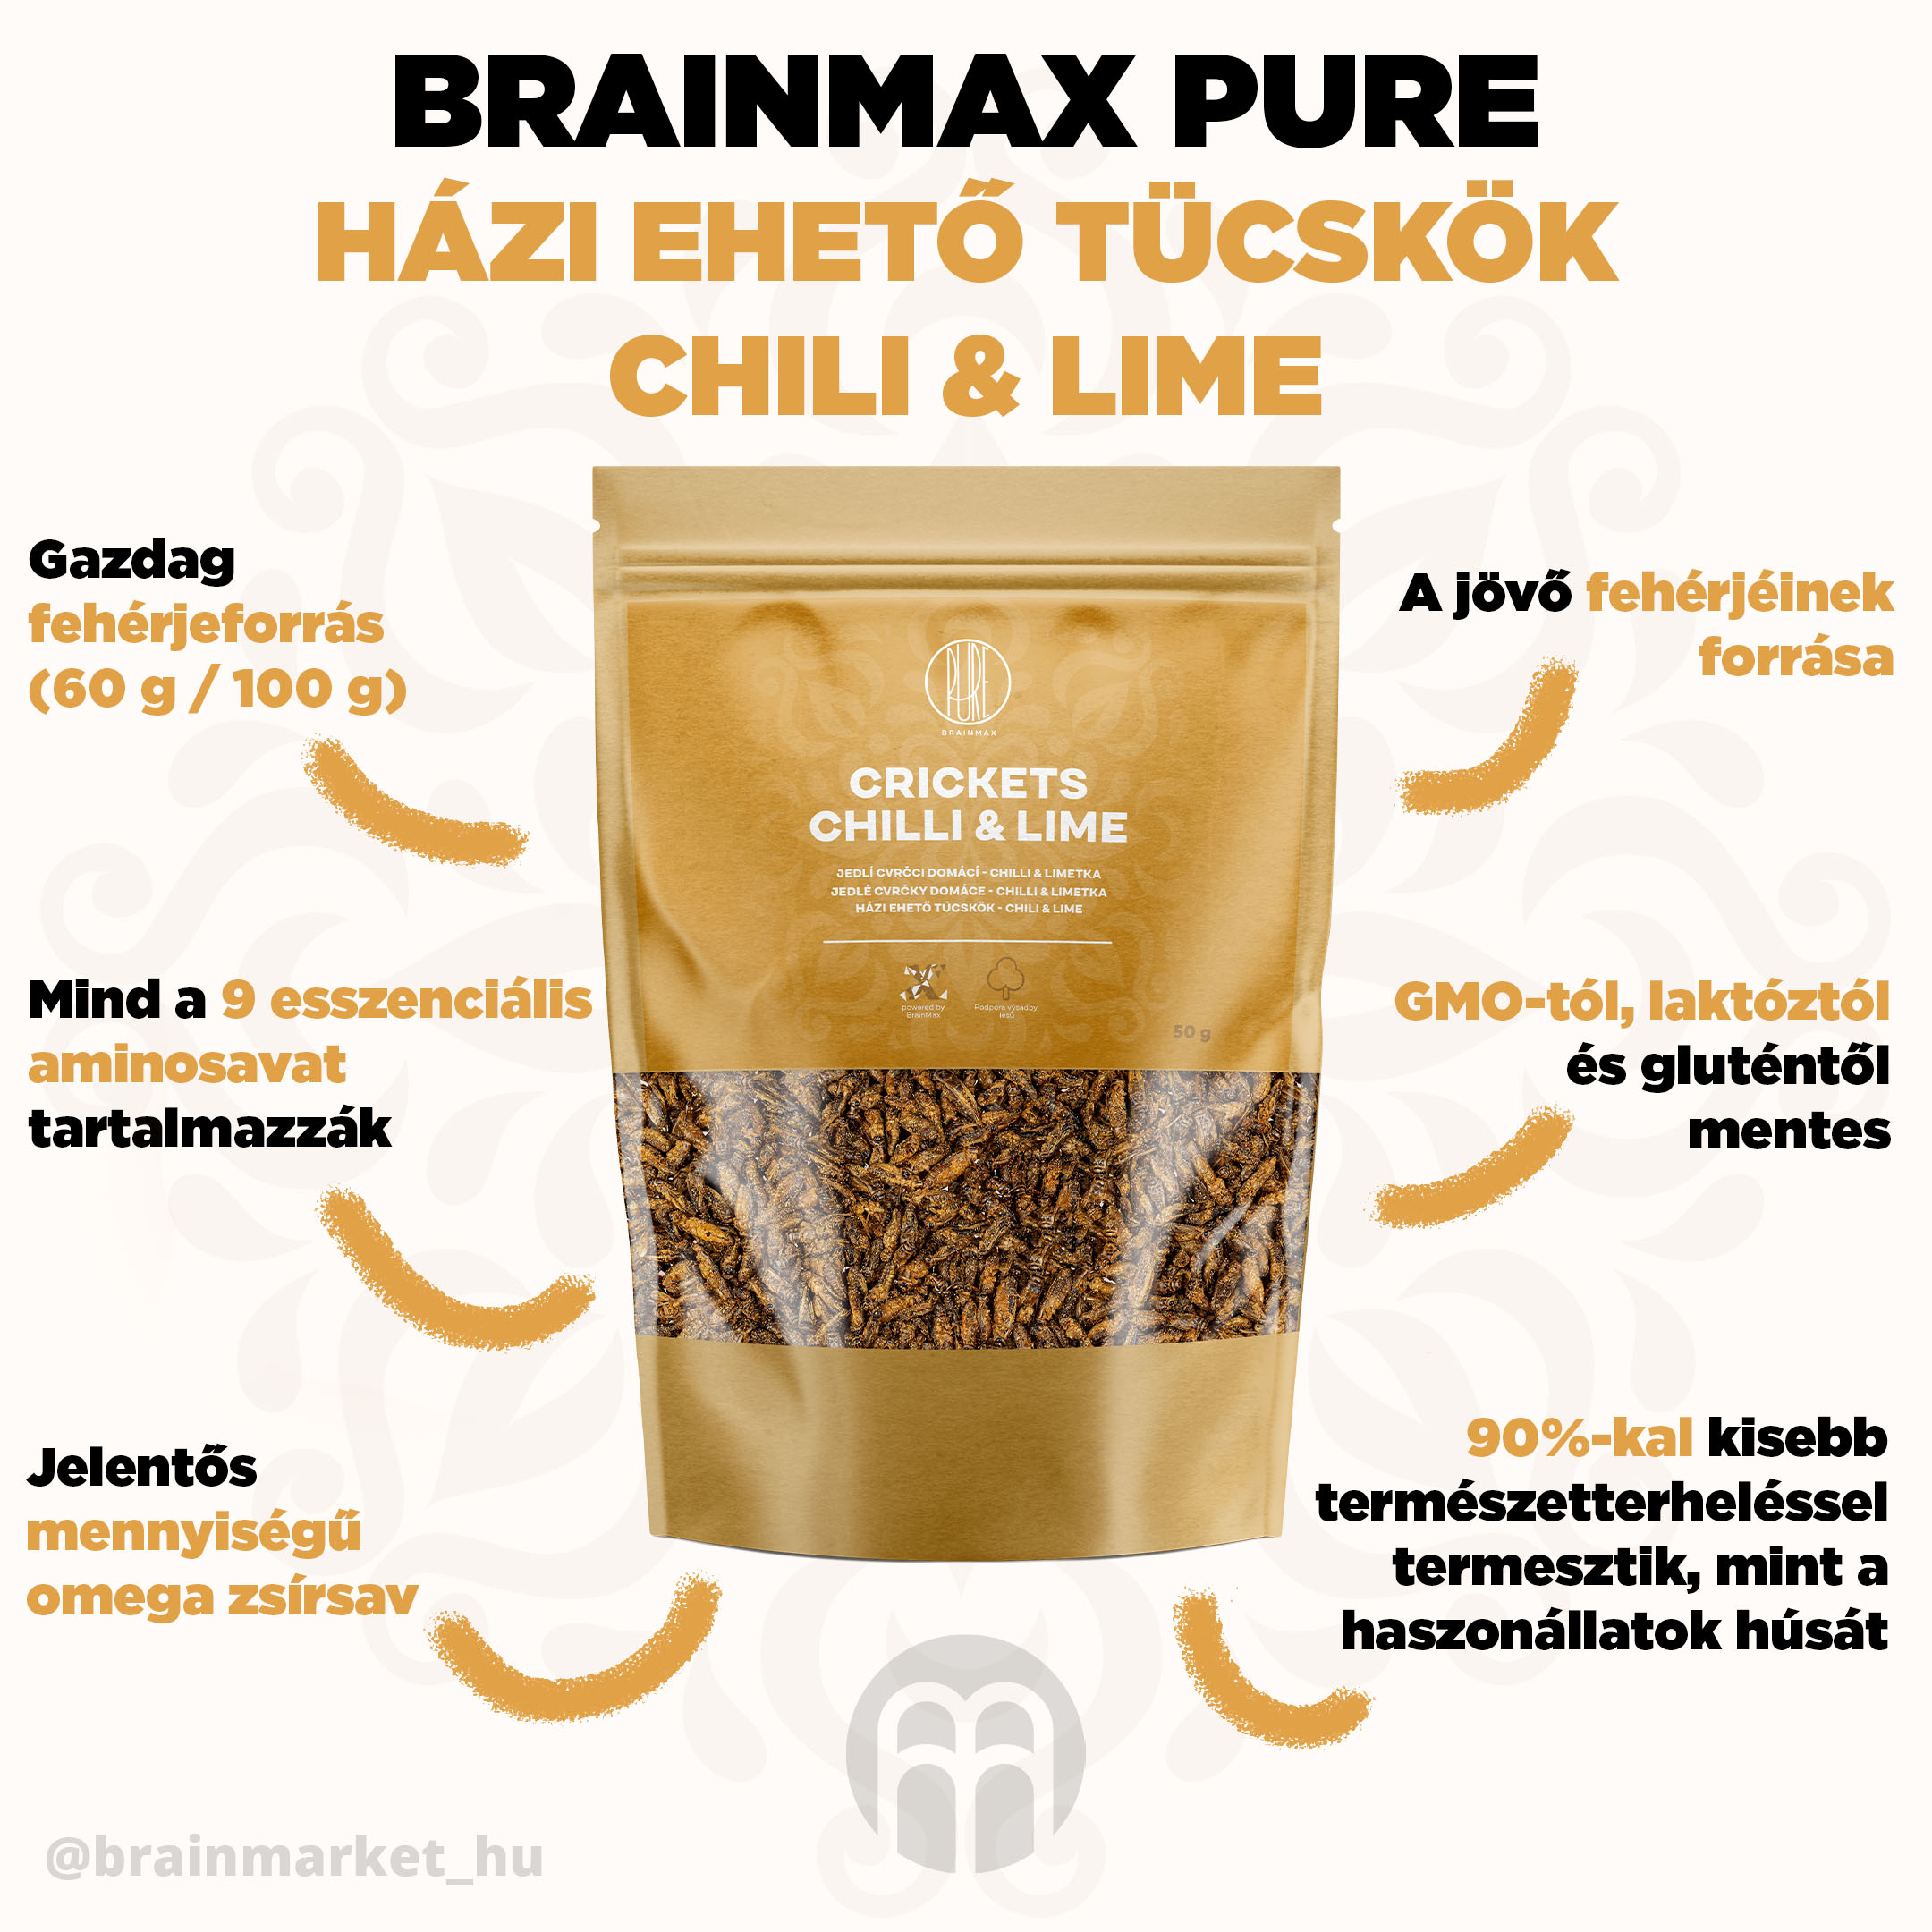 brainmax pure cvrcci chili lime infografika brainmarket CZ